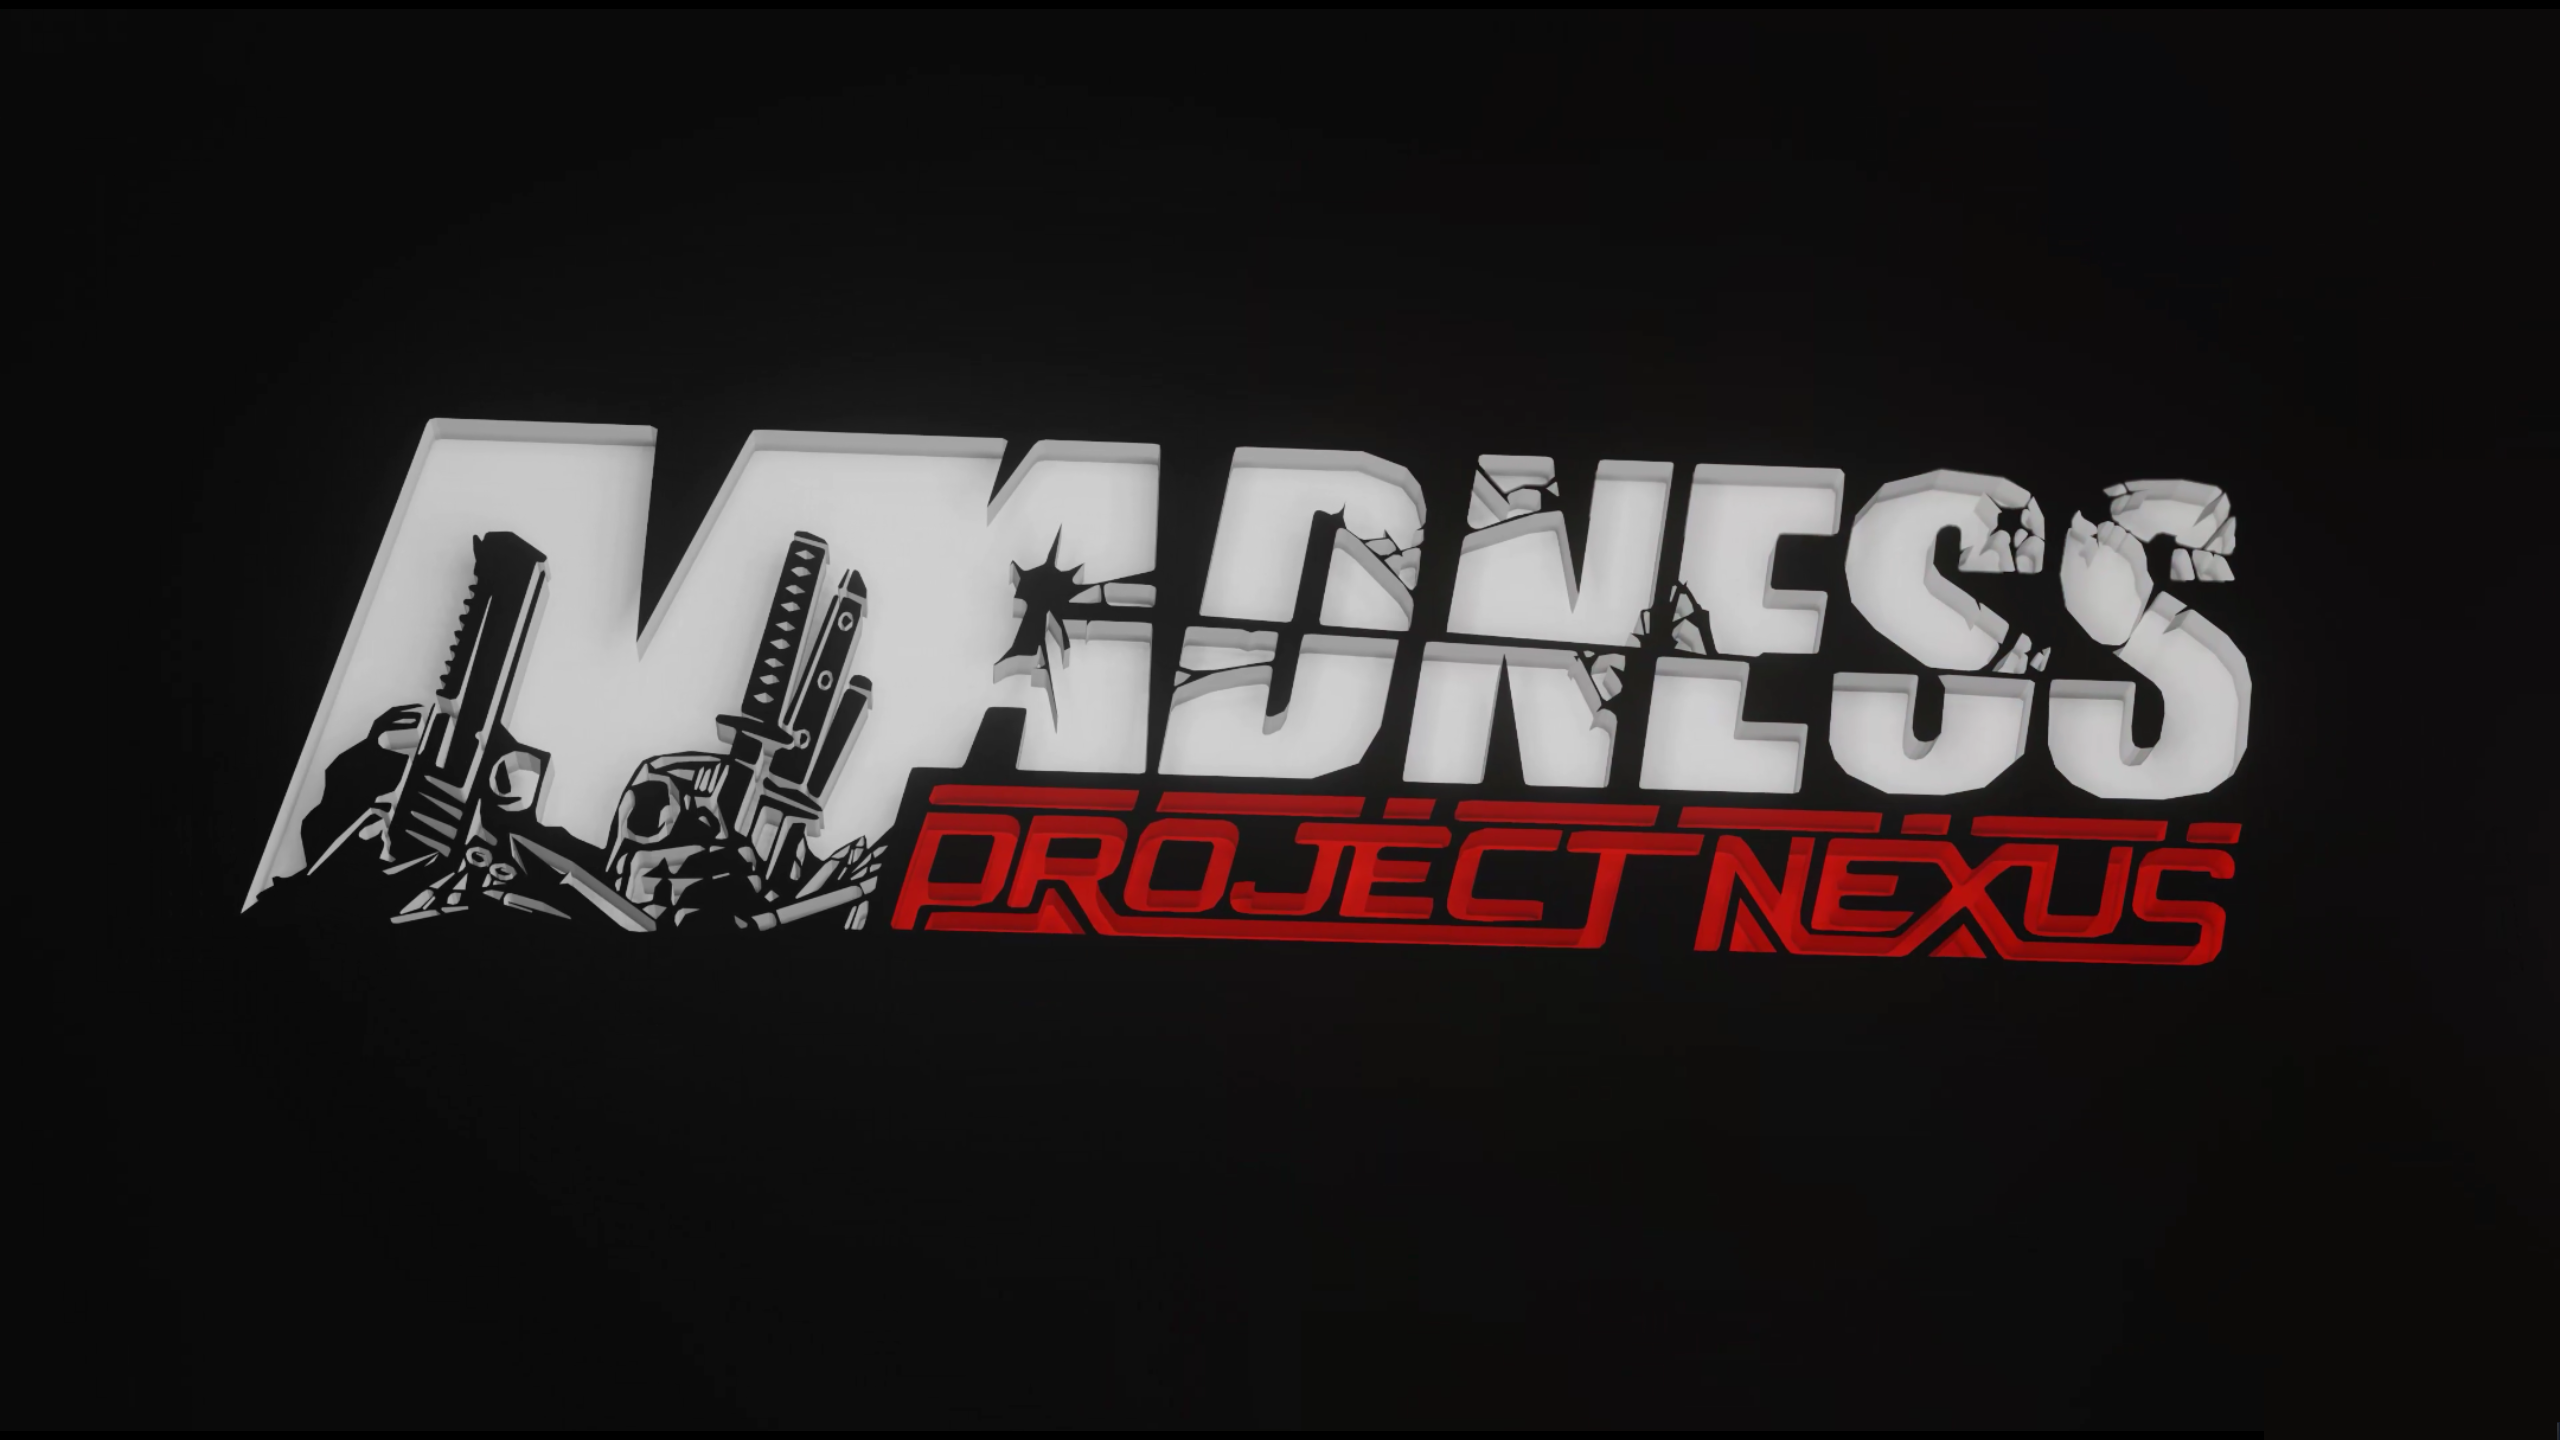 Мэднесс комбат игра. Мэднесс Проджект Нексус. Madness Project Nexus 2. Combat: Project Nexus. Маднесс комбат Проджект Нексус.